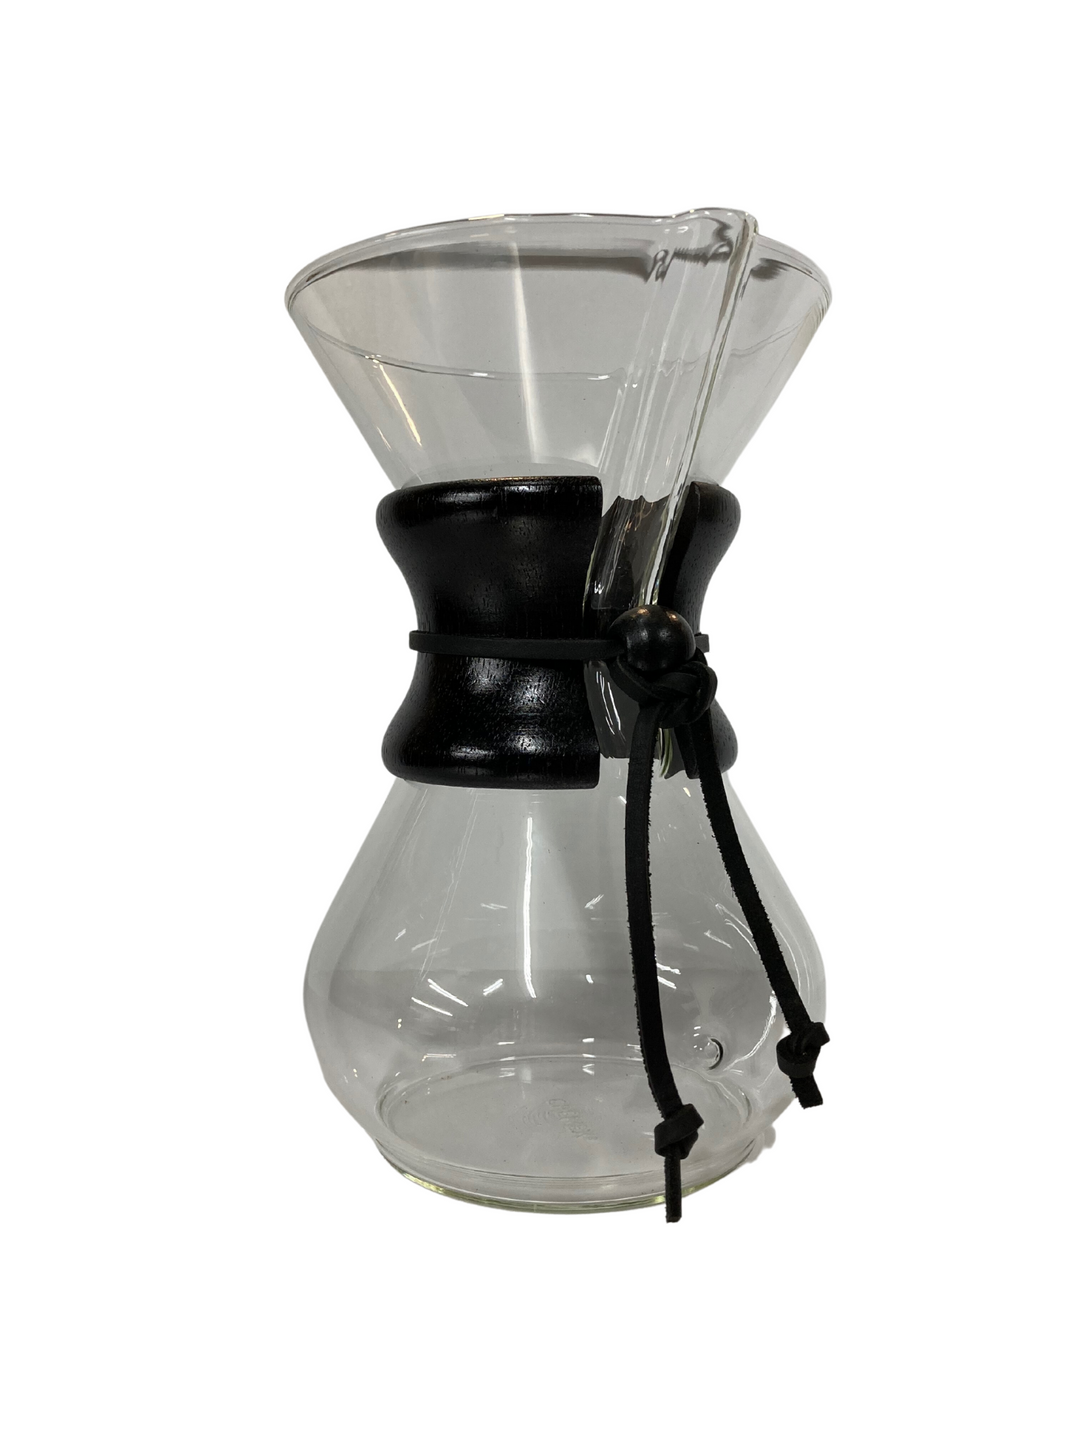 Pour-Over Coffee Gooseneck Kettle, Size: 12 oz, Black